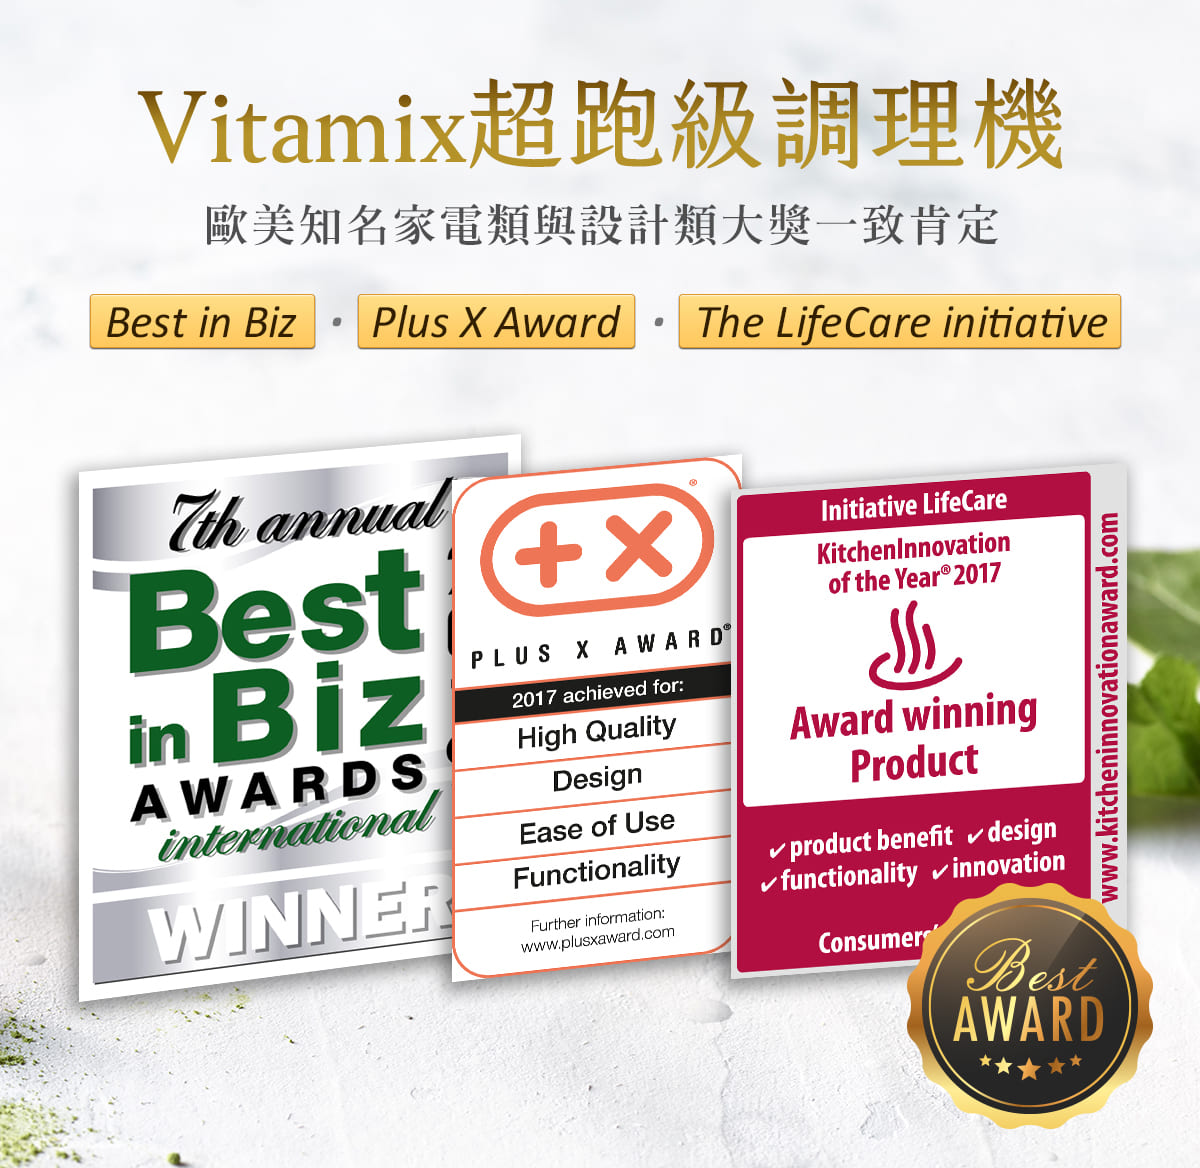 Vitamix調理機-A2500i-A3500i-超跑級調理機-陳月卿-養生達人-獎項-得獎-設計大獎-歐美大獎-Plus X Award- The LifeCare initiative -Best in Biz